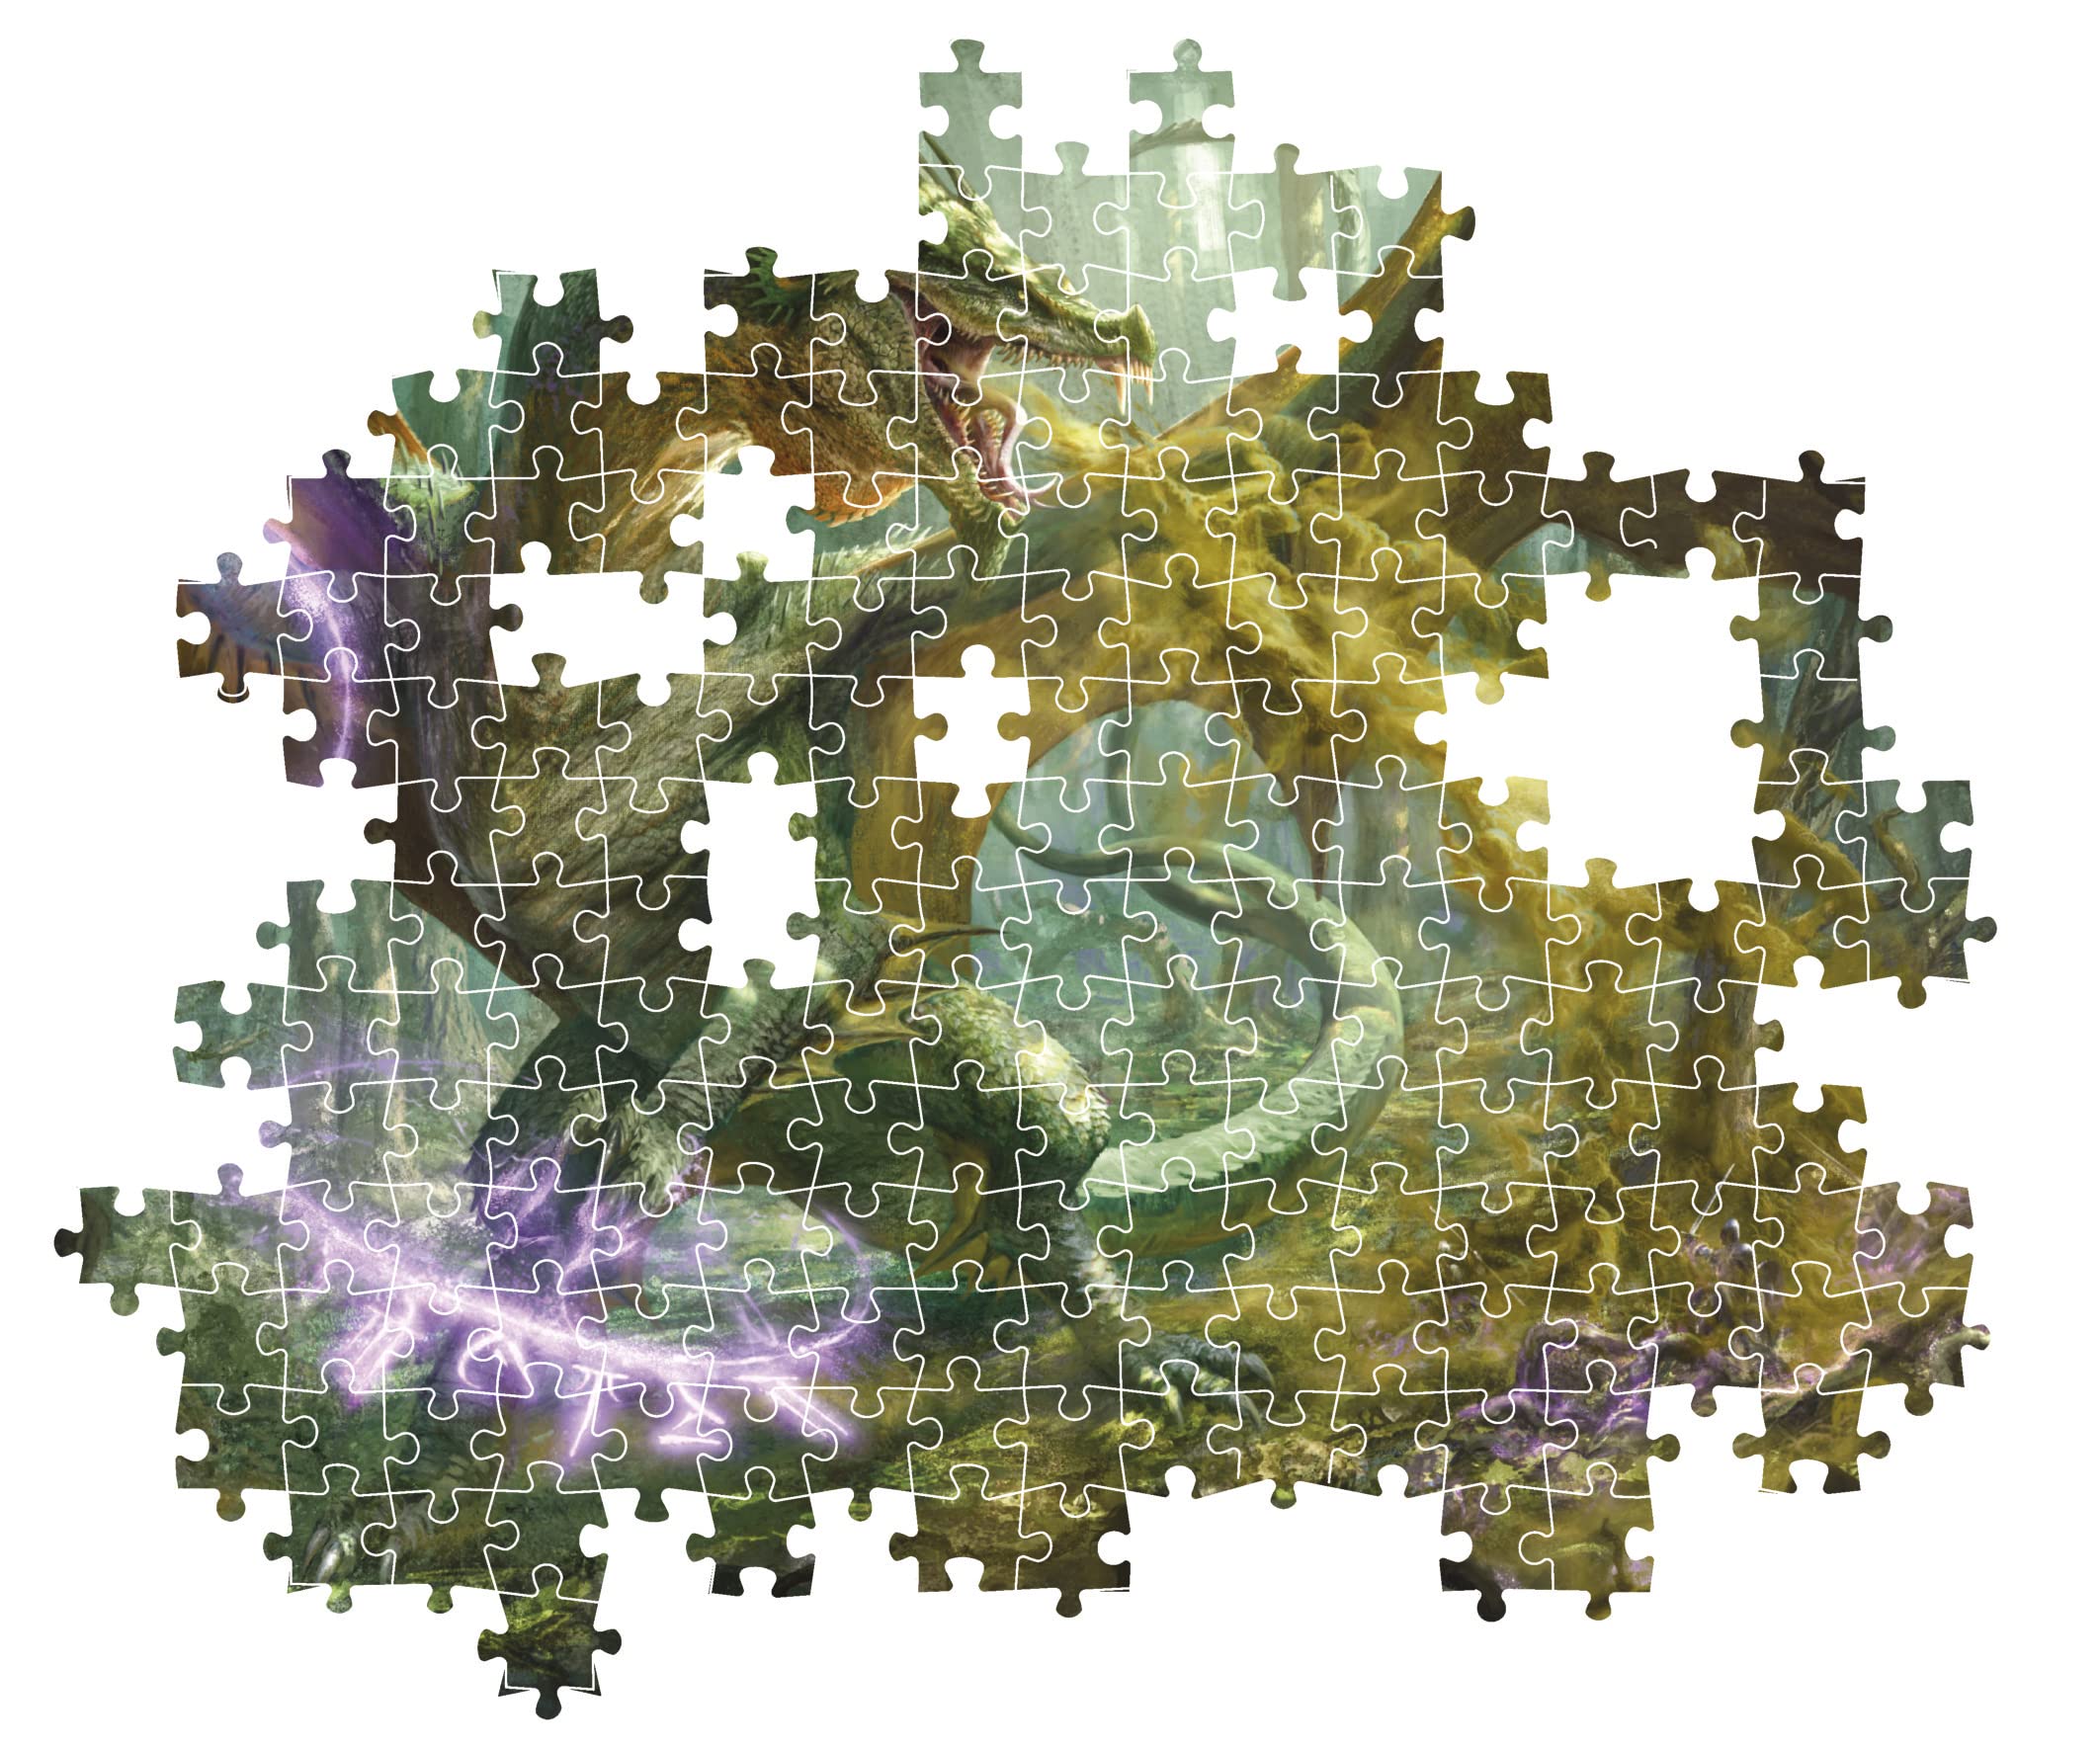 CLEMENTONI - Puzzle - Dungeon & Dragons - 1000 Pieces - Age: 10-99